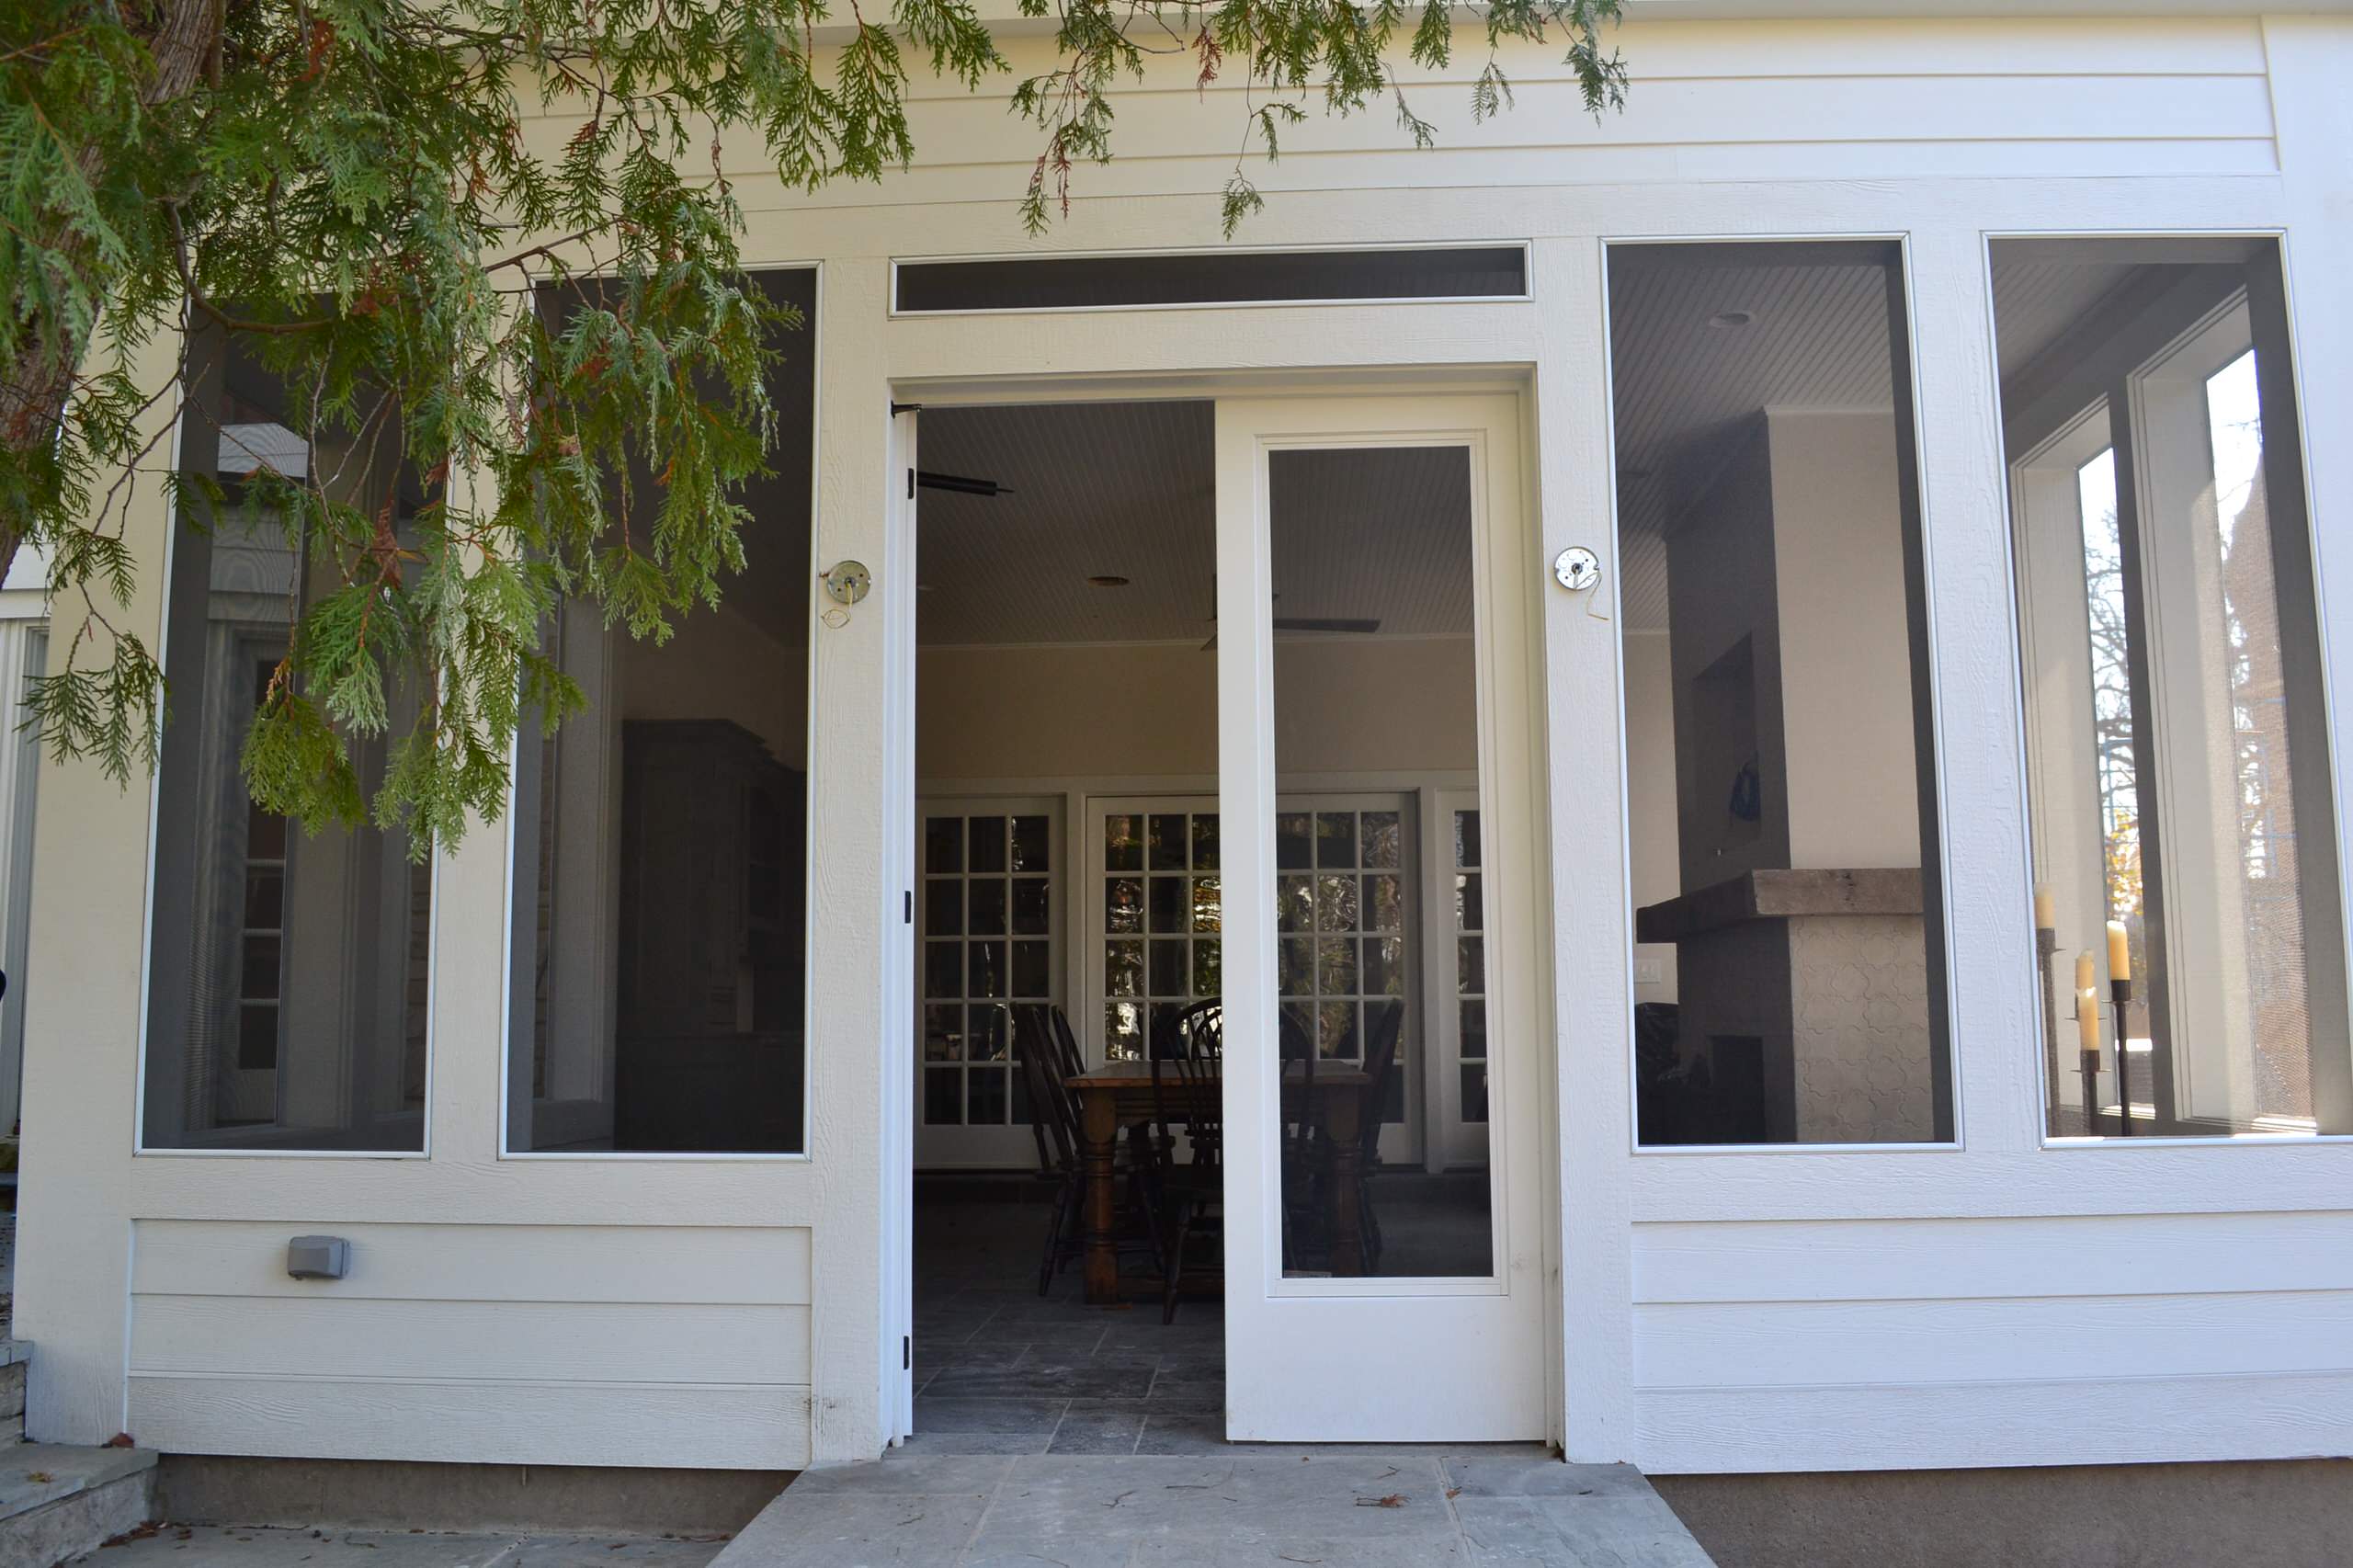 Three - season-room & Front entry porch